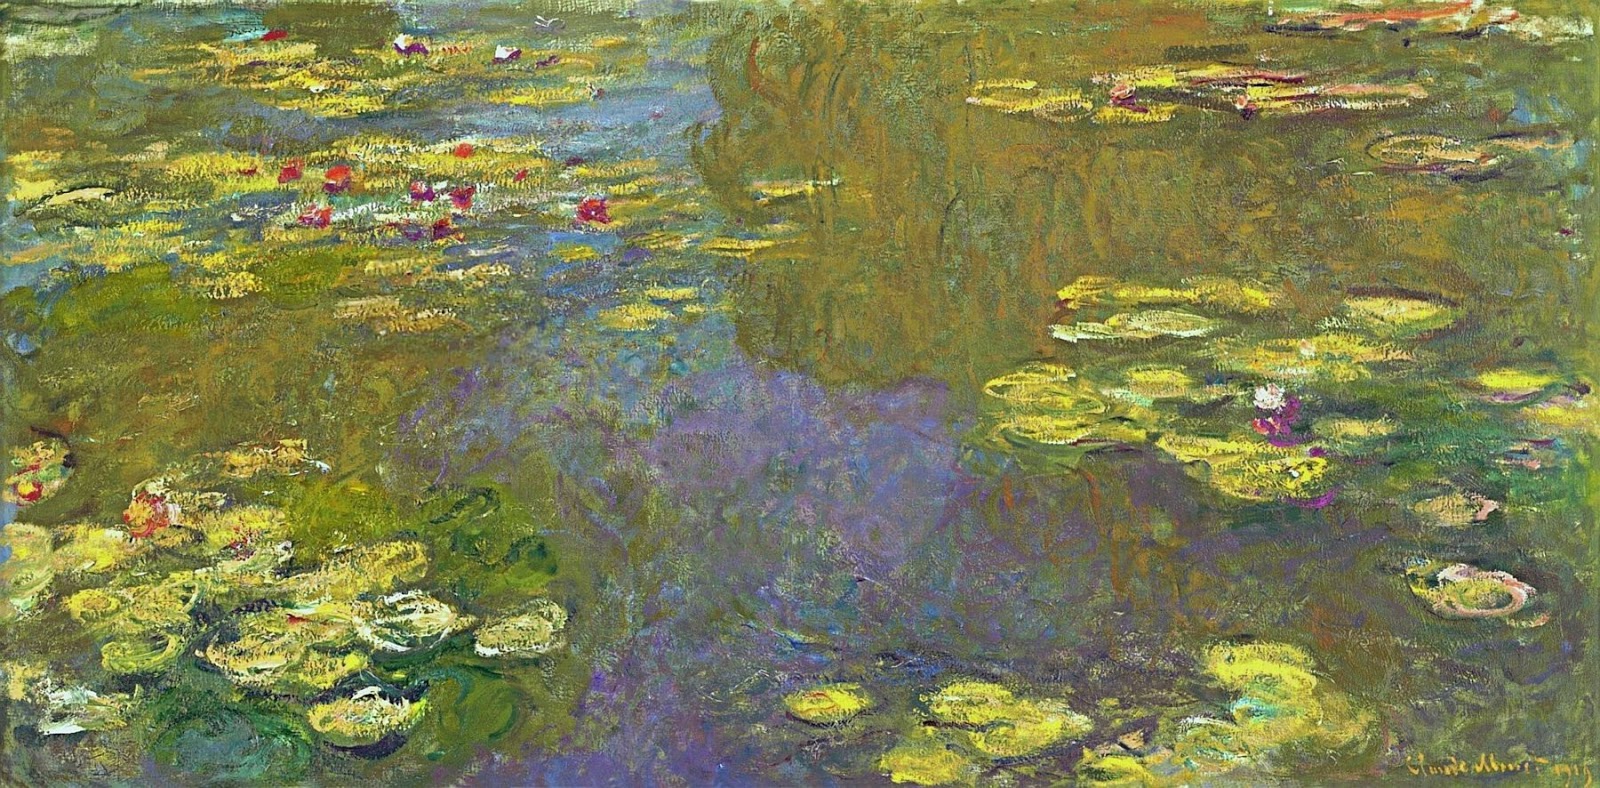 Claude+Monet-1840-1926 (412).jpg